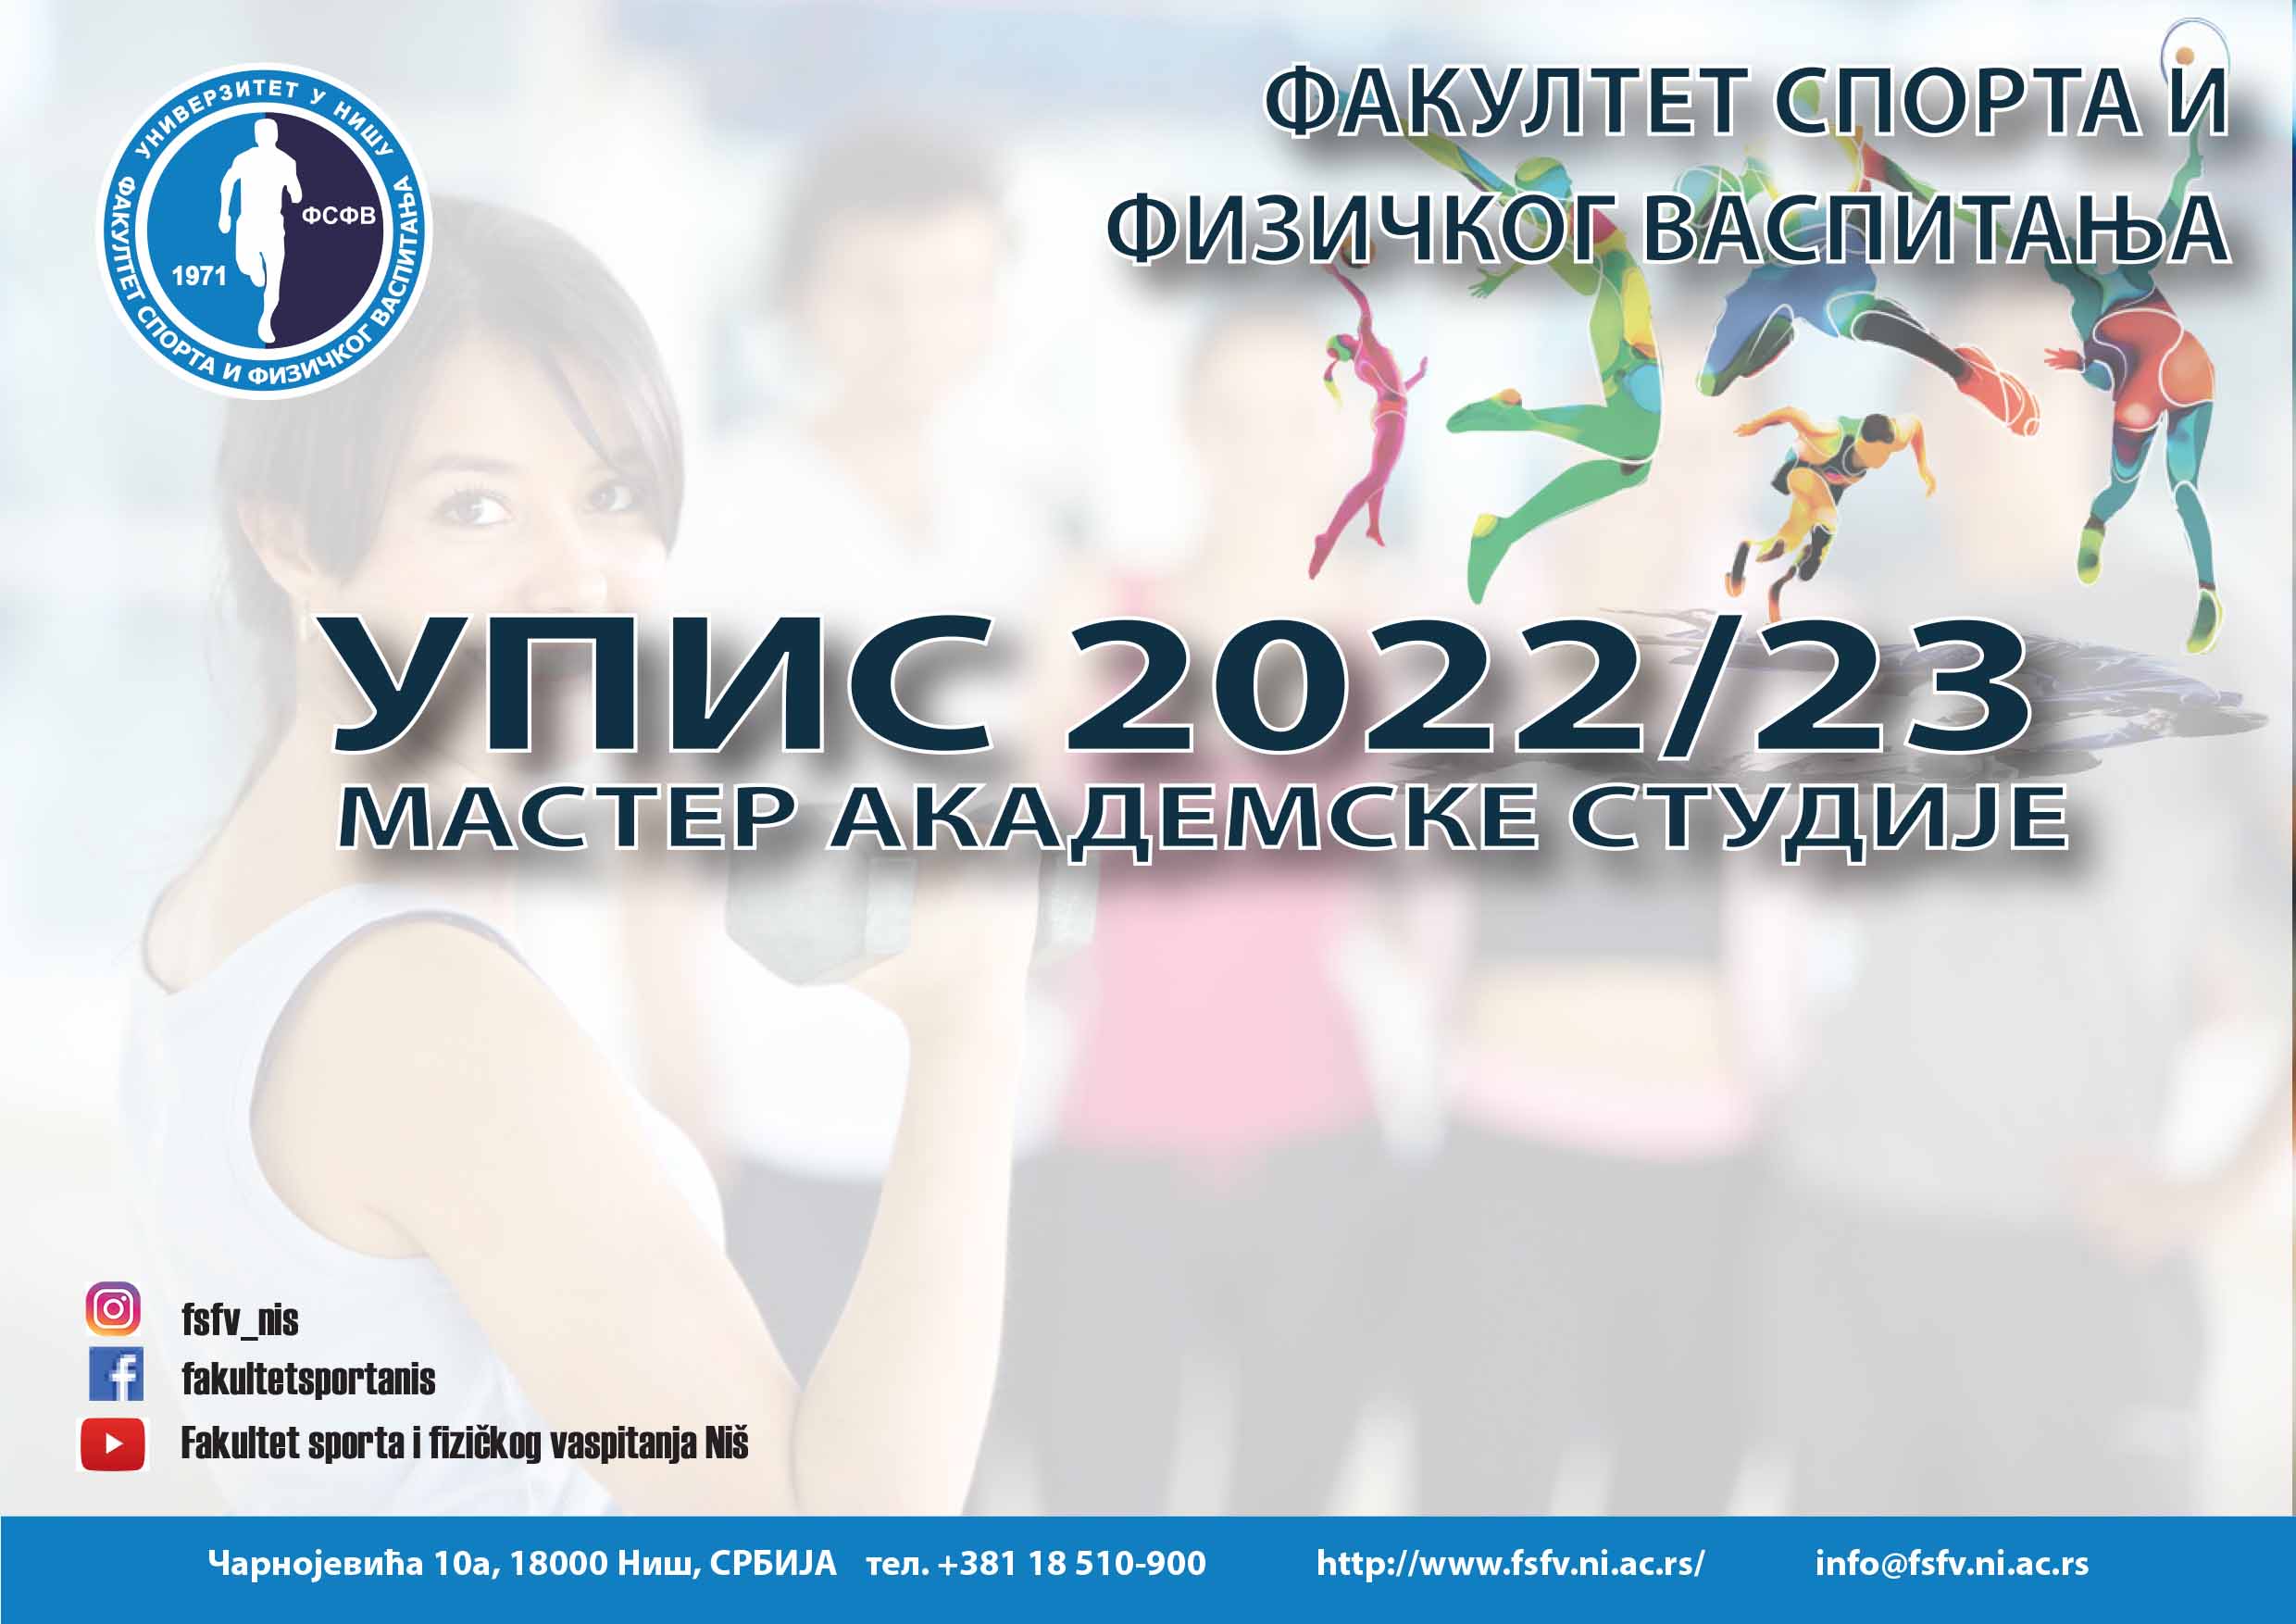 Upis-master-2022-2023.jpg